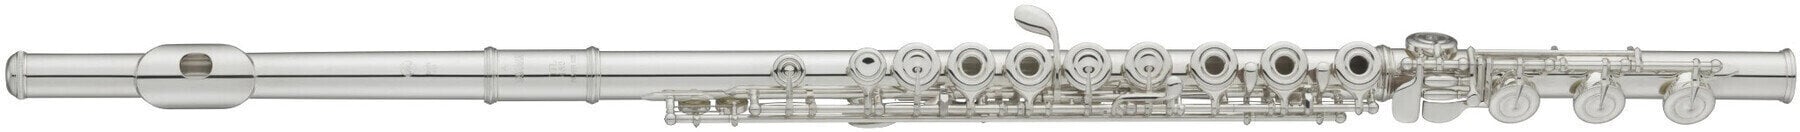 Concert flute Yamaha YFL 472H Concert flute